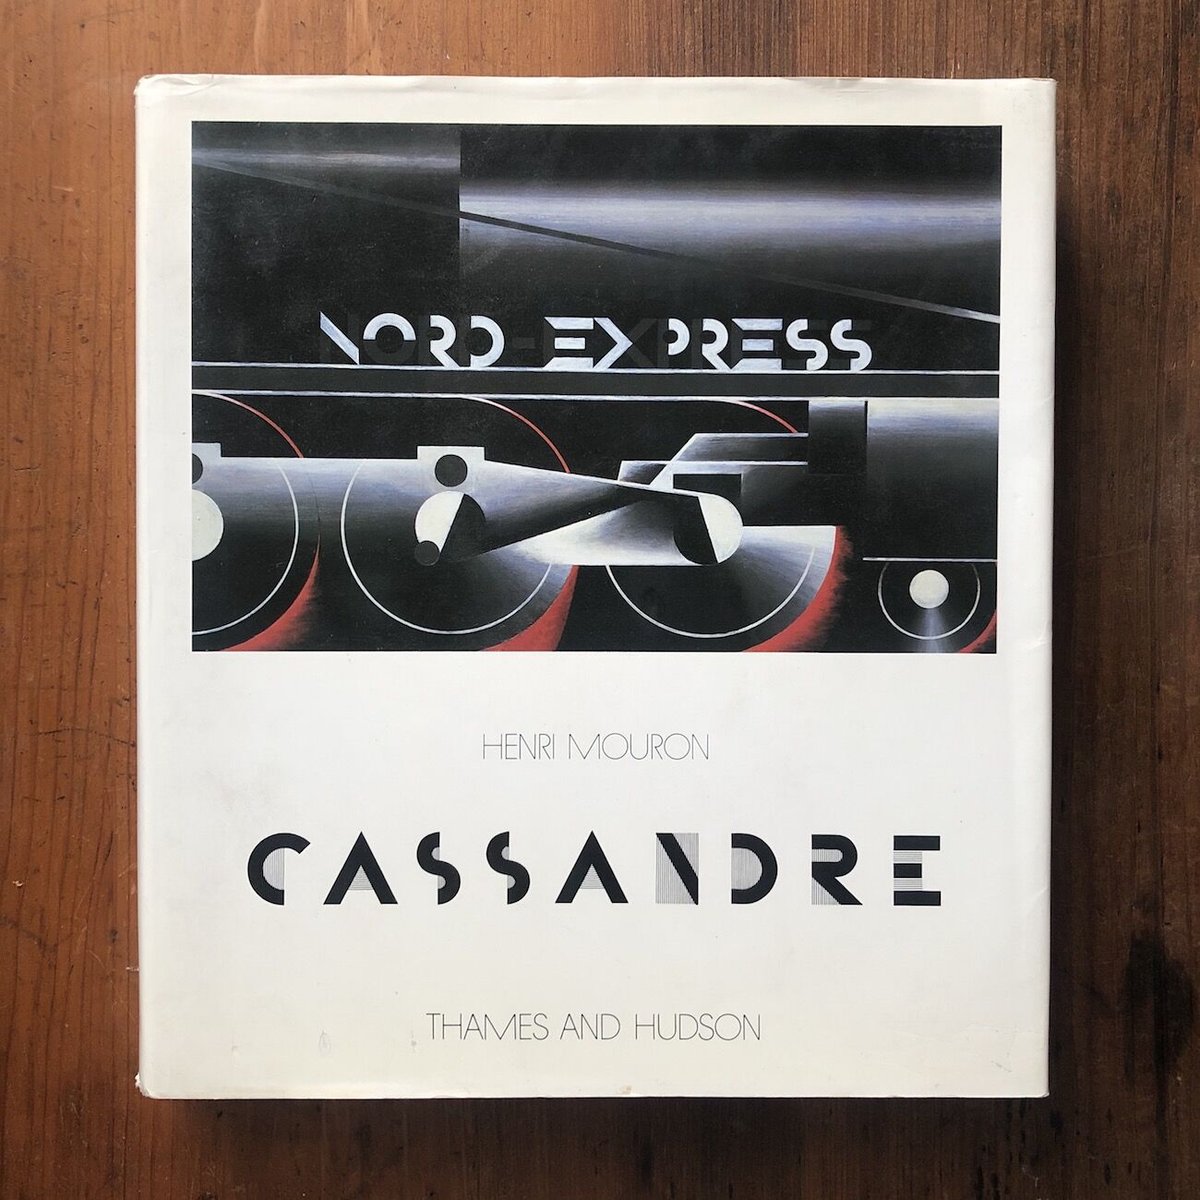 CASSANDRE」Henri Mouron | Frobergue online store